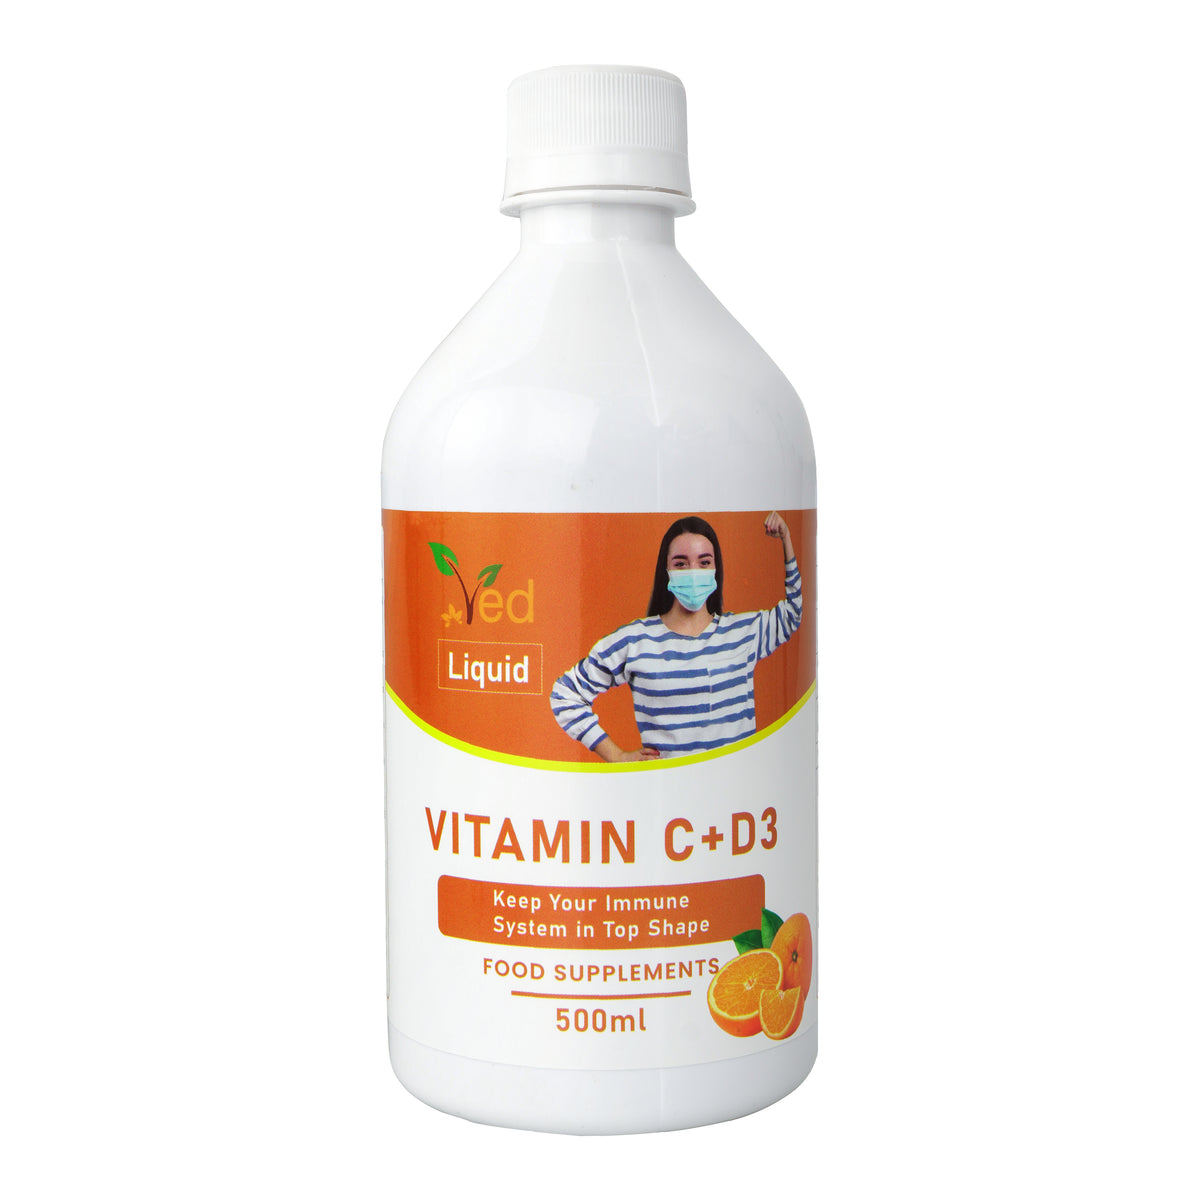 Ved Calcium, Magnesium, Vitamin D3 and Zinc Vegan Liquid Supplement, Supports Bones, Teeth and Muscle Function. 500 ml.